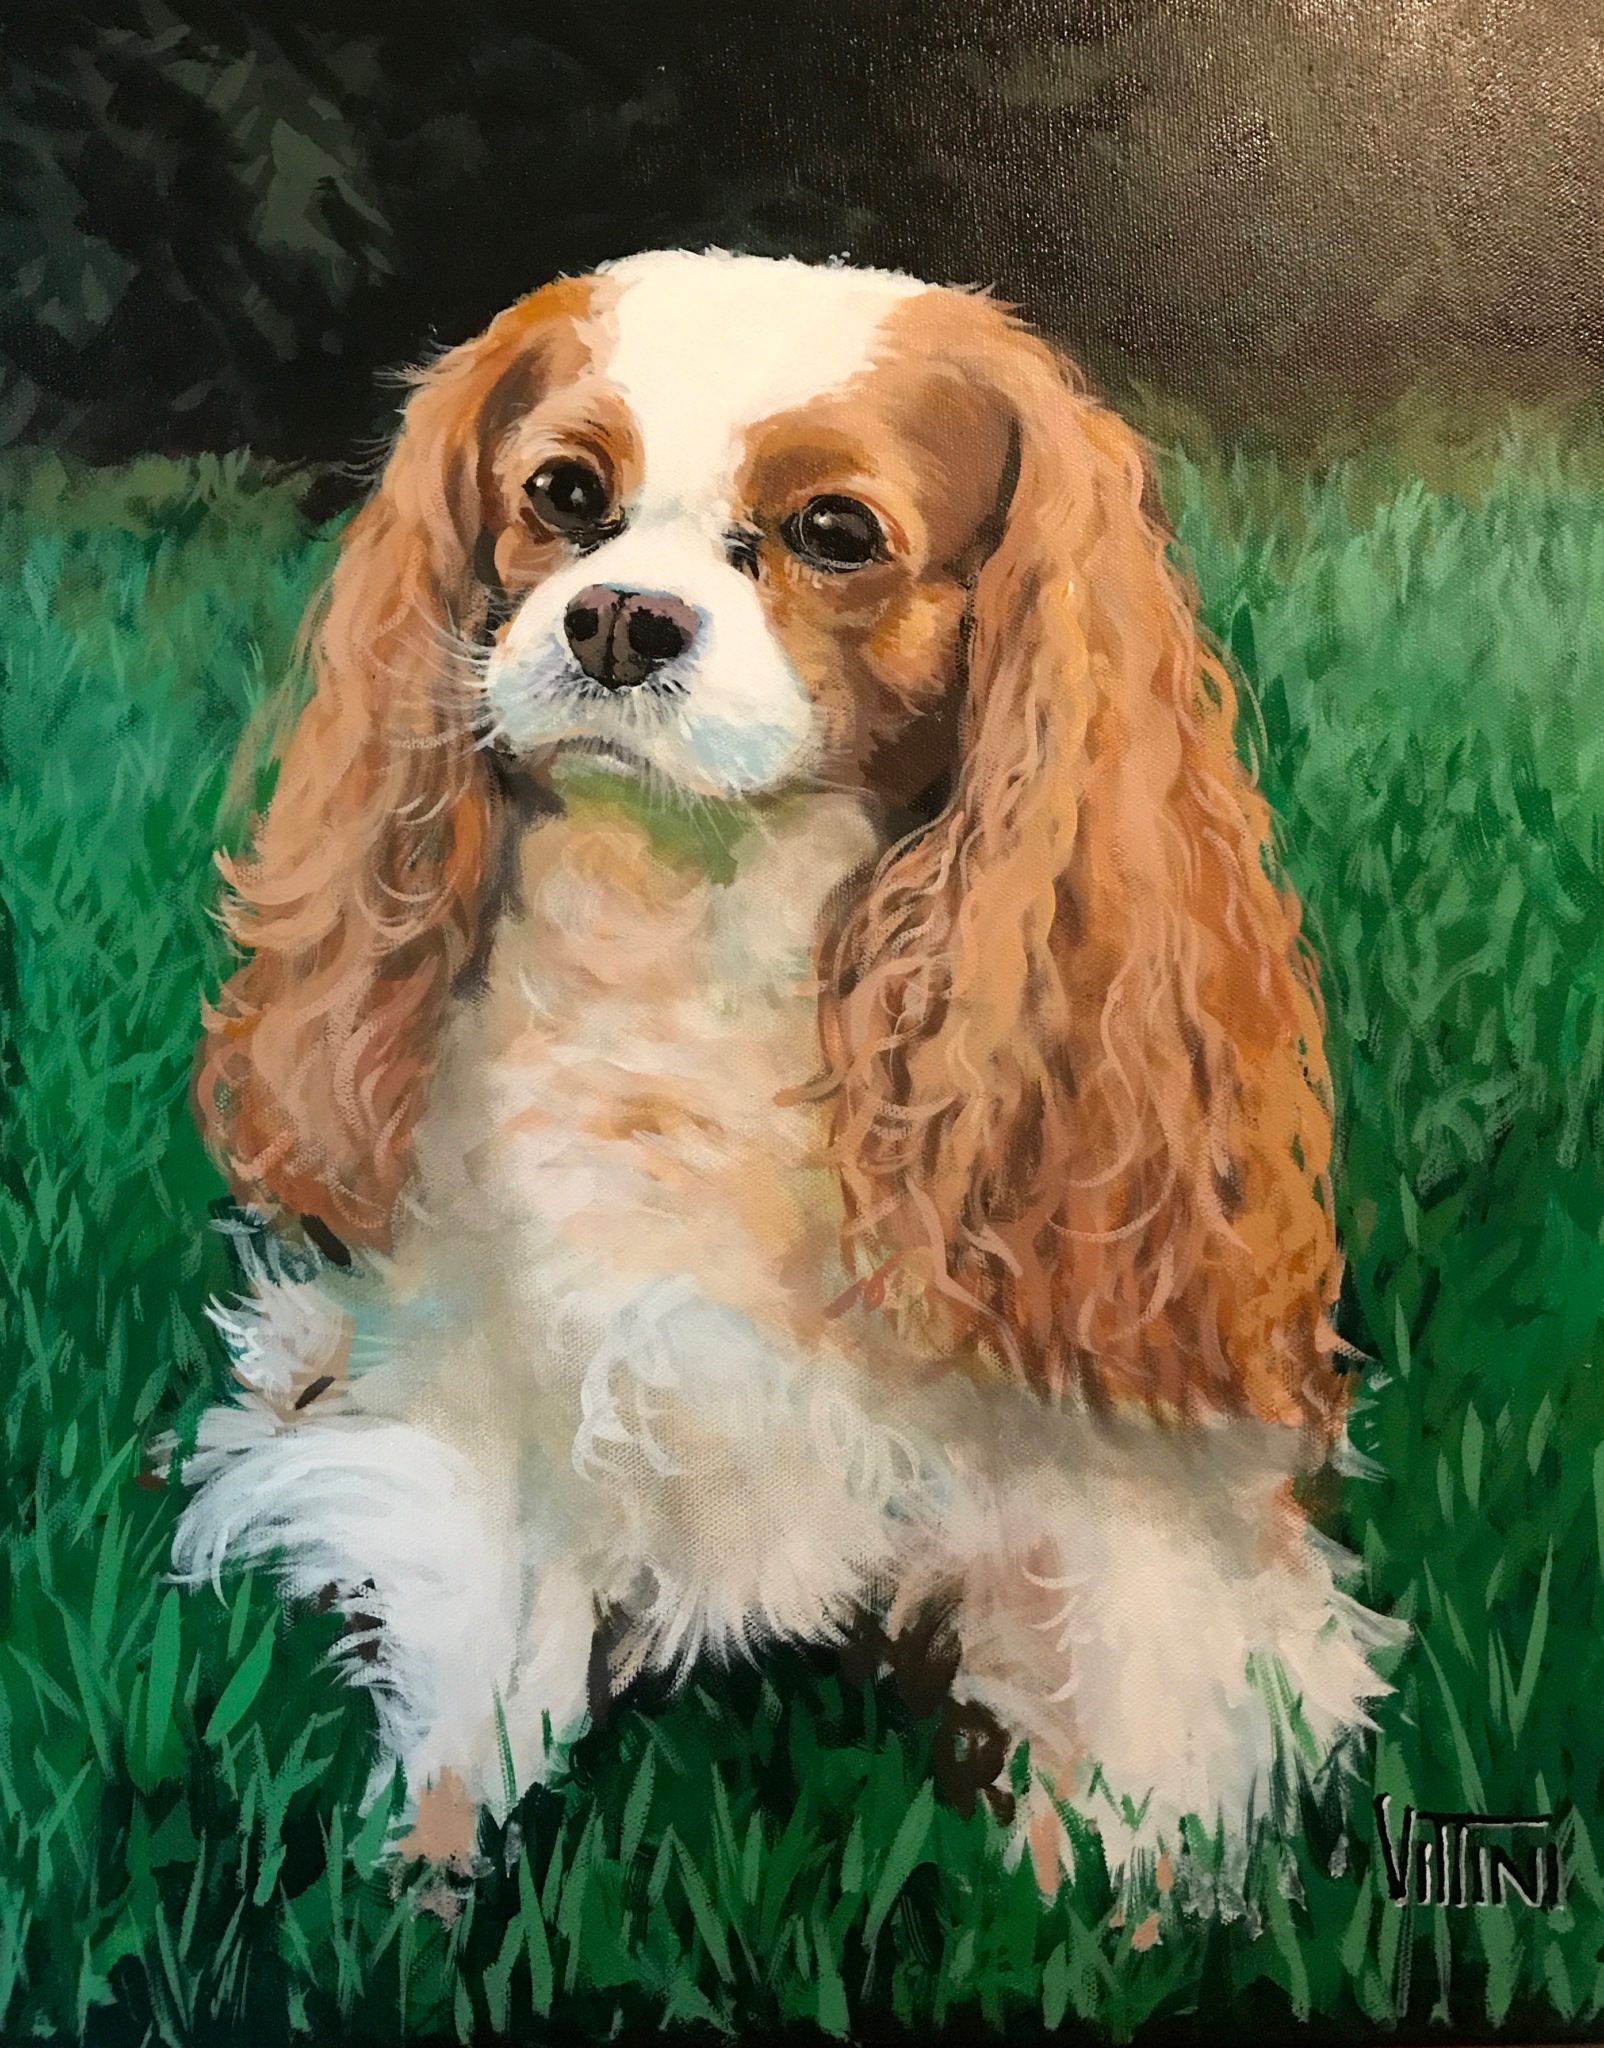 Freshly painted pet portrait of dog by Artist Mabel Vittini.